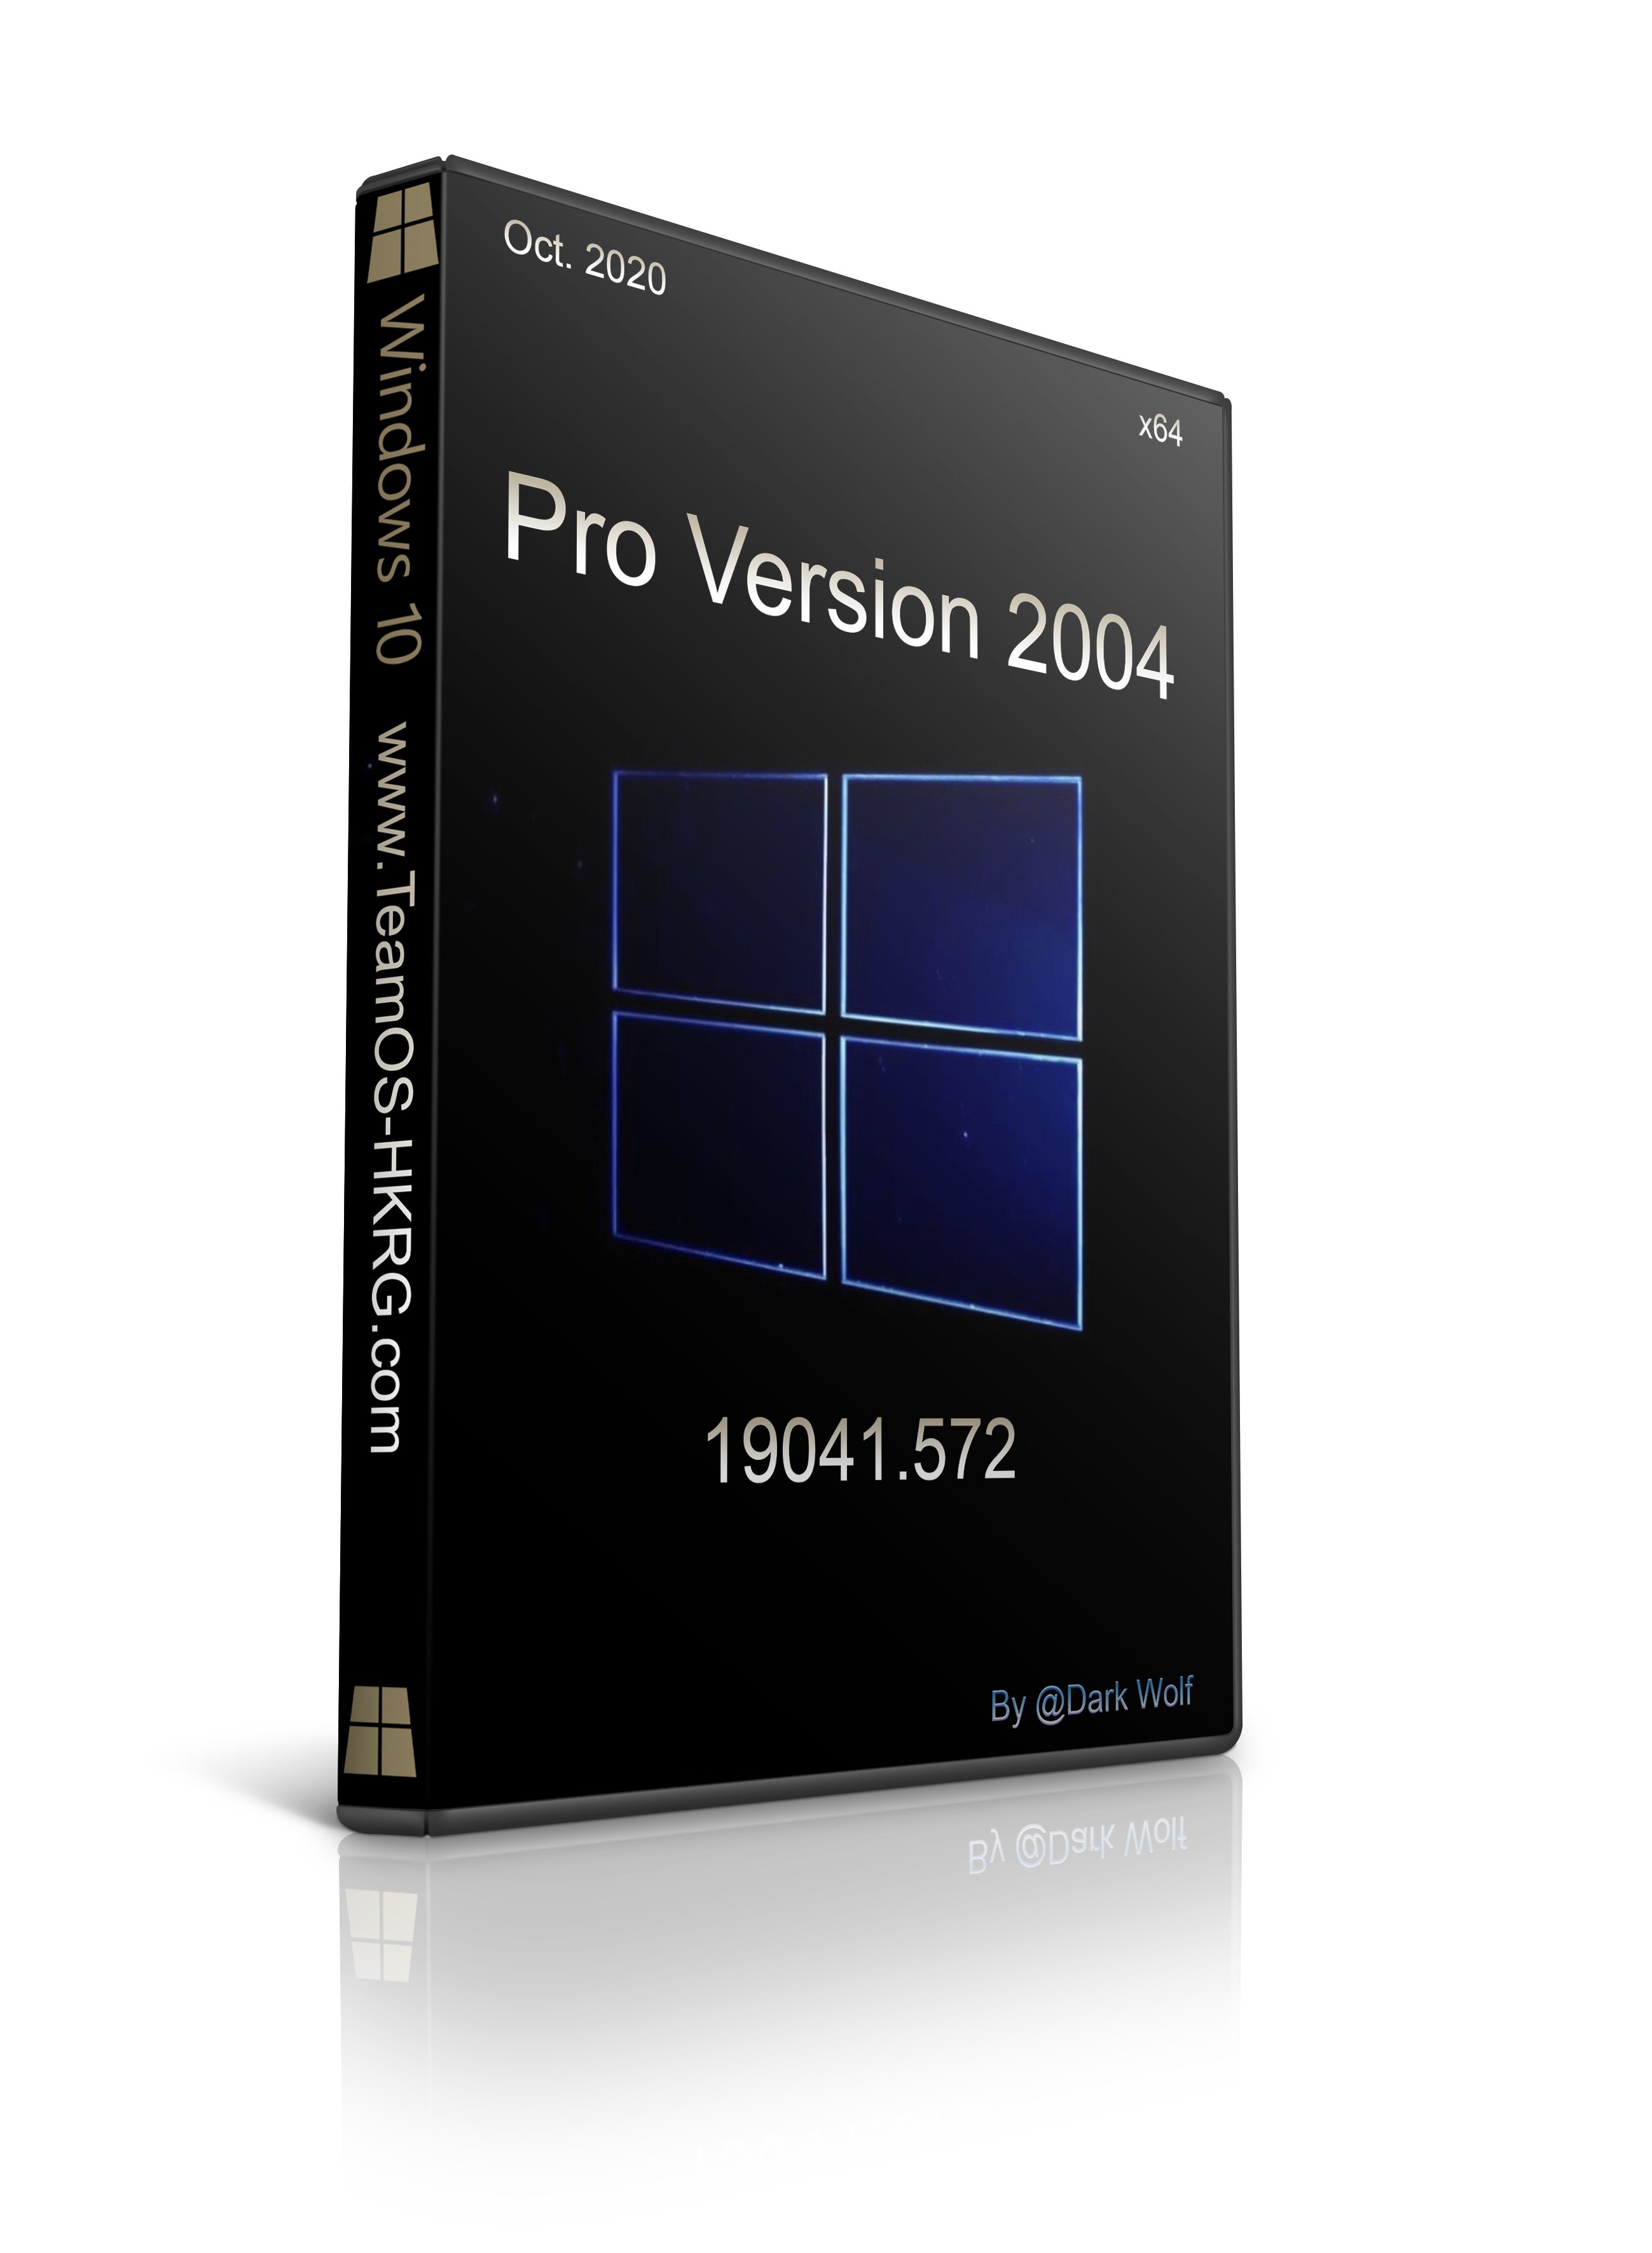 windows 10 pro 2004 download iso